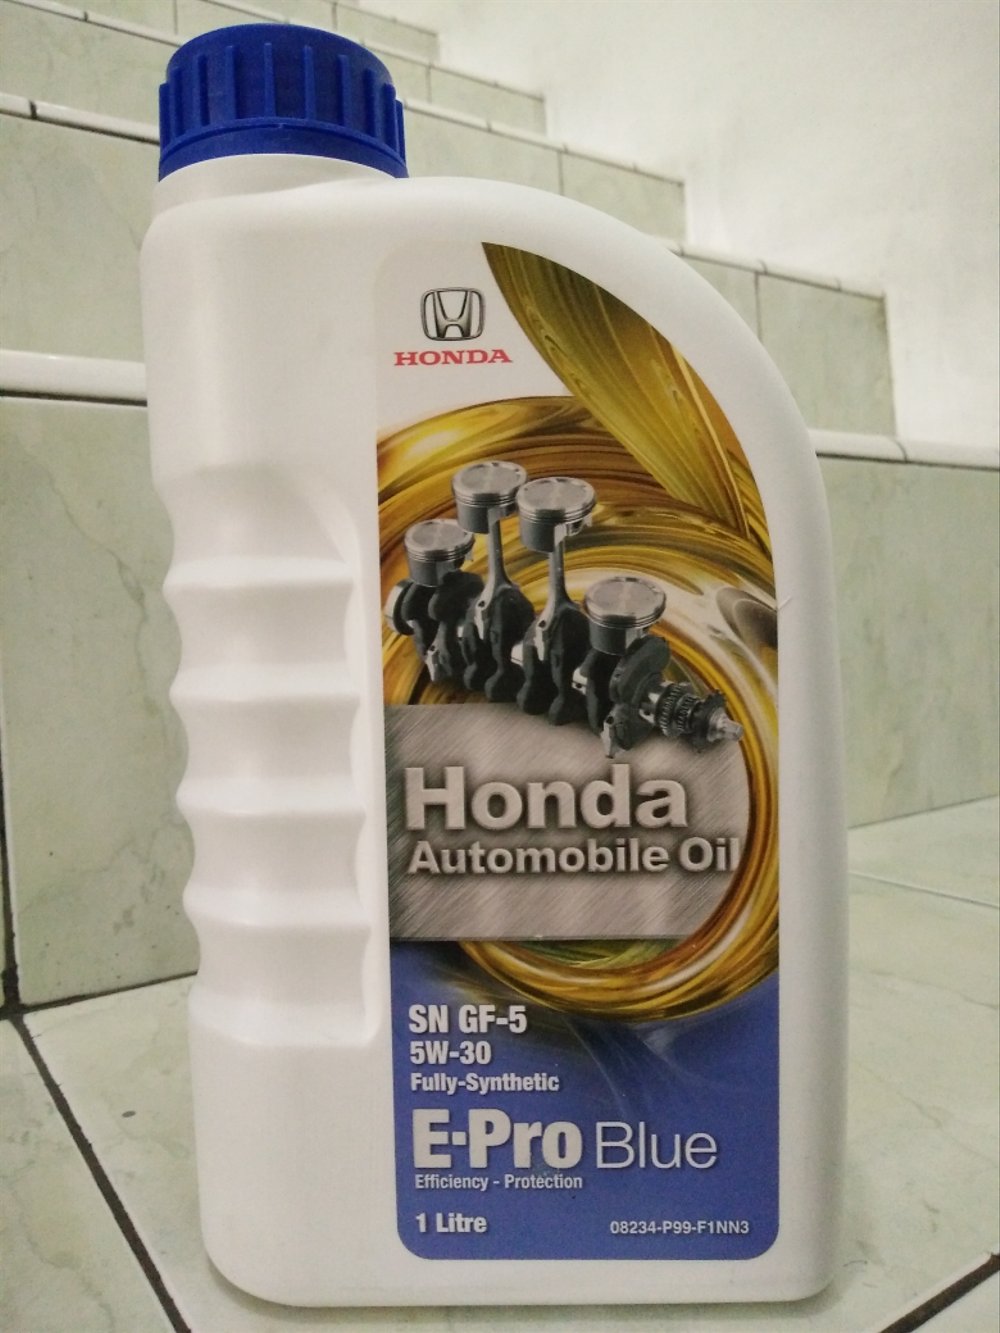 Honda Automobile Oil